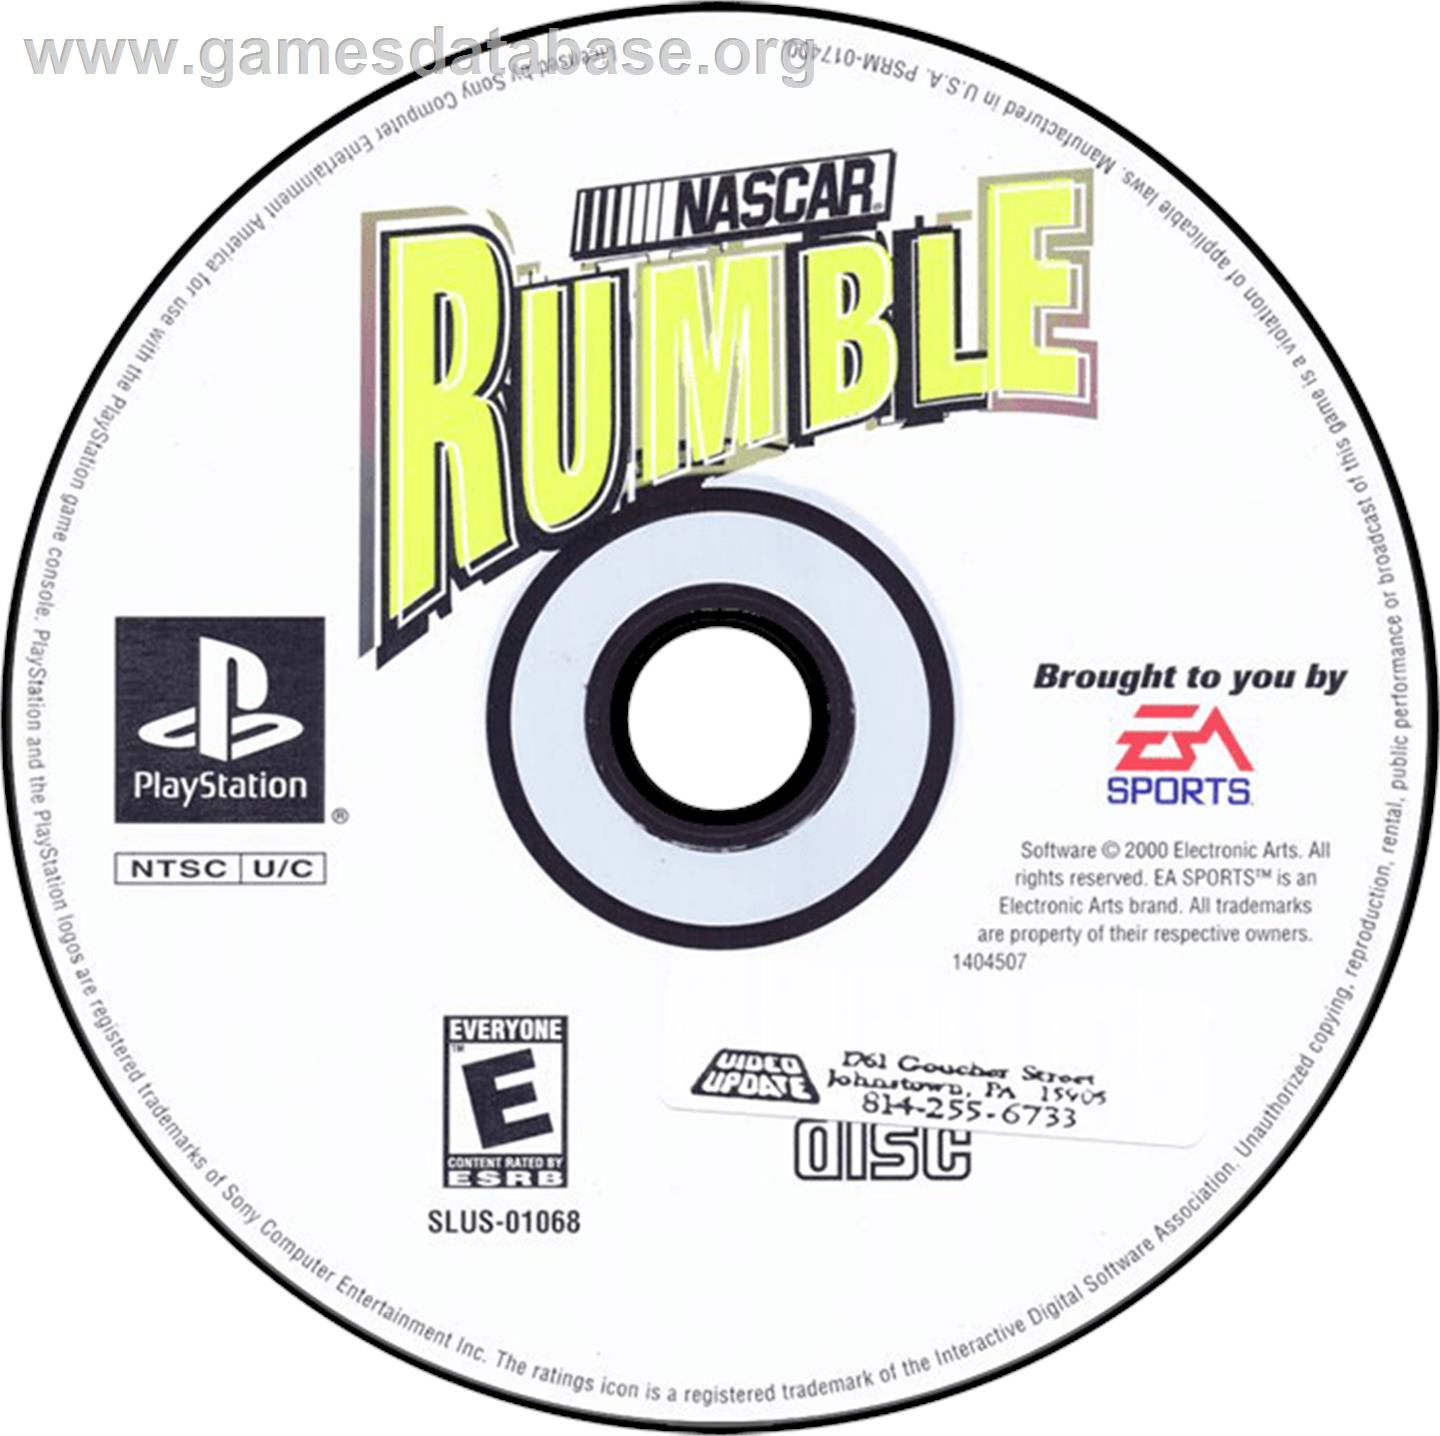 NASCAR Rumble - Sony Playstation - Artwork - Disc